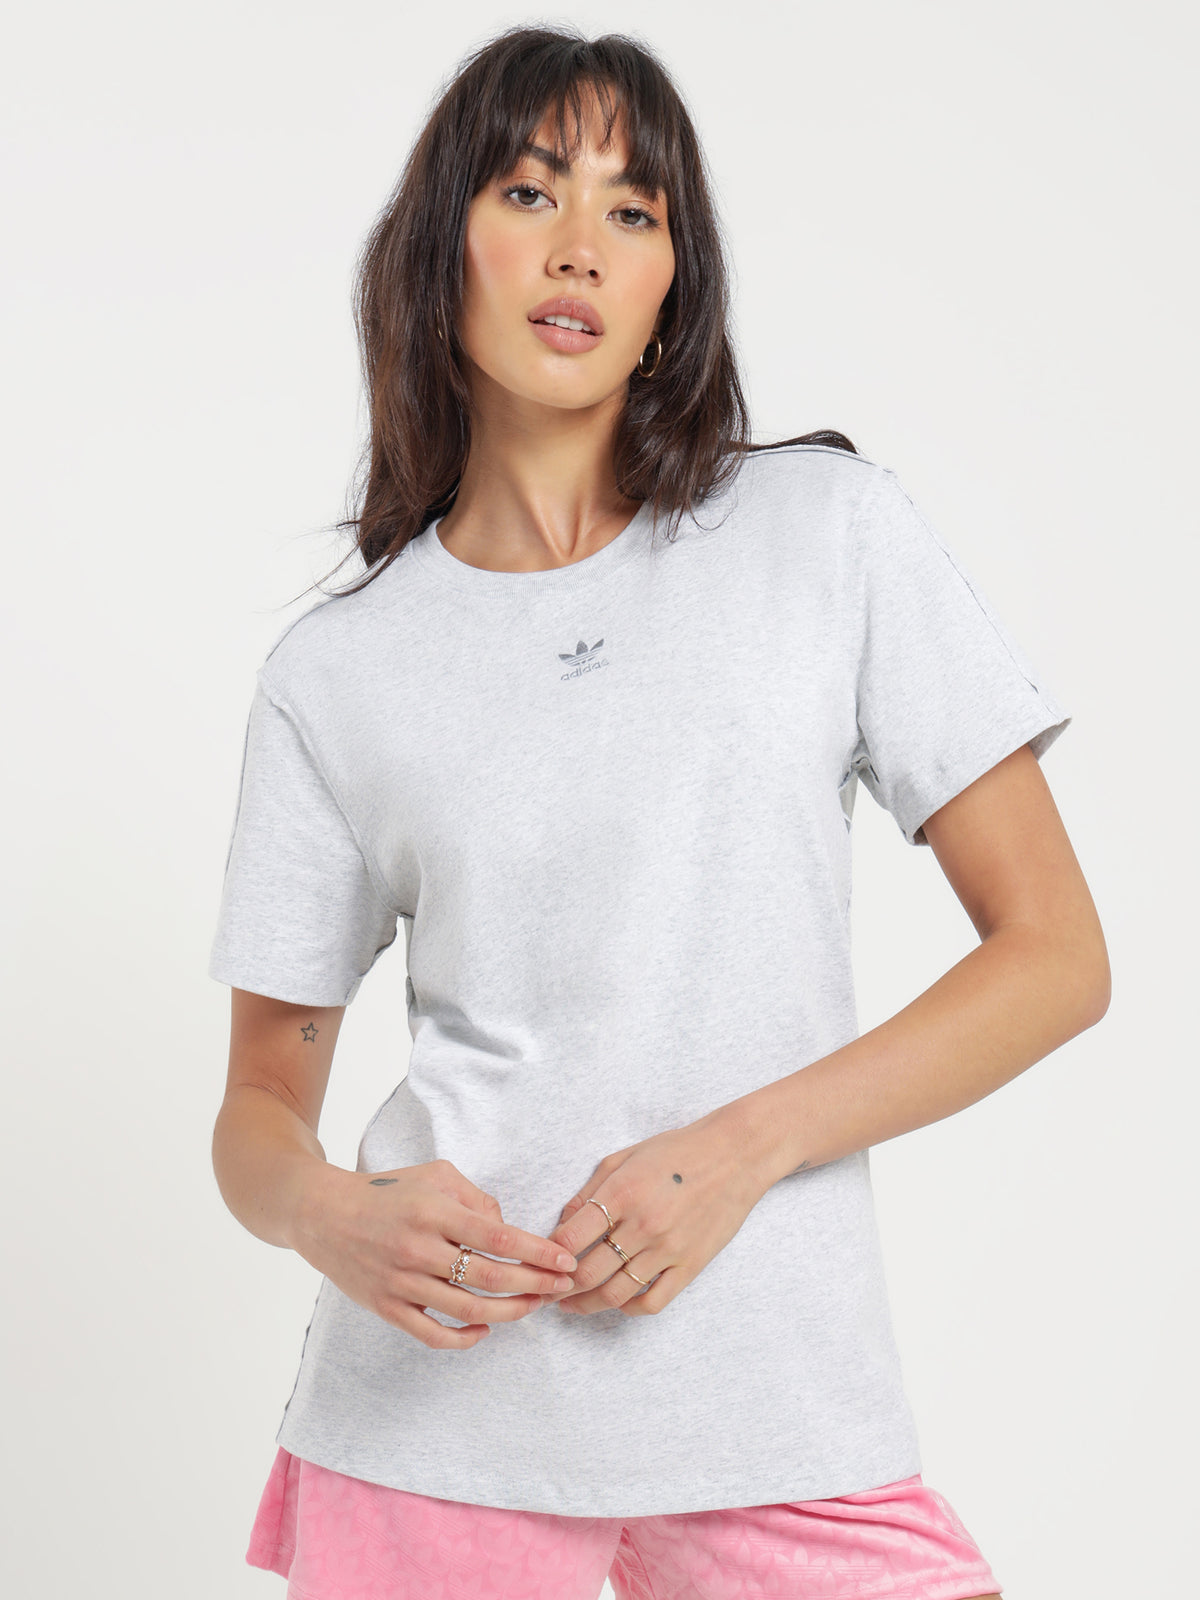 Loose Loungewear T-Shirt in Light Grey Heather